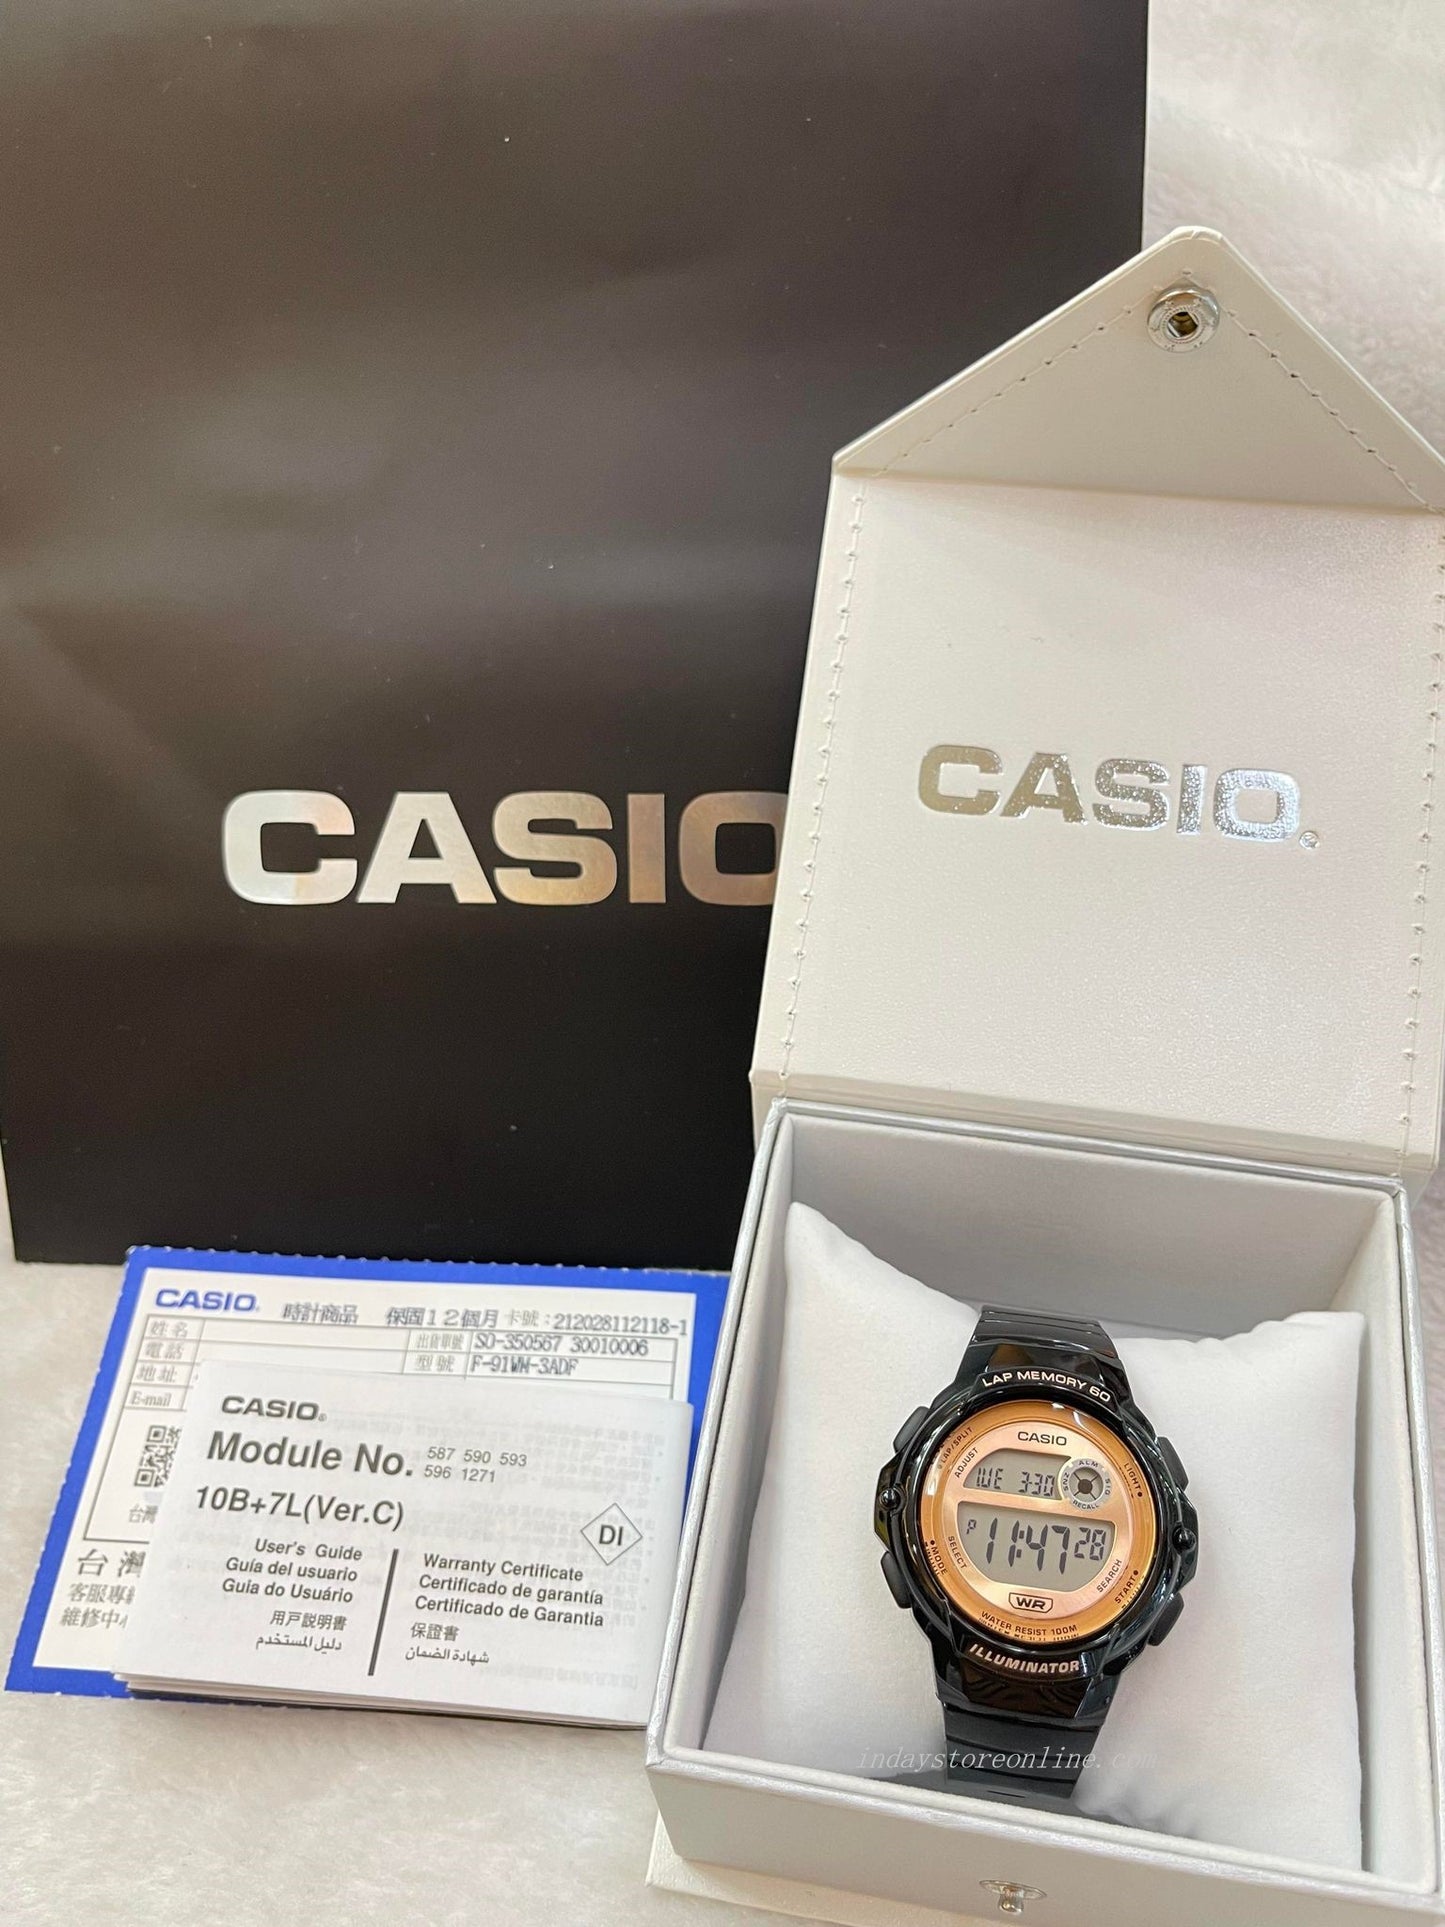 Casio Digital Women's Watch LWS-1200H-1A Digital Sporty Design Resin Band Resin Glass